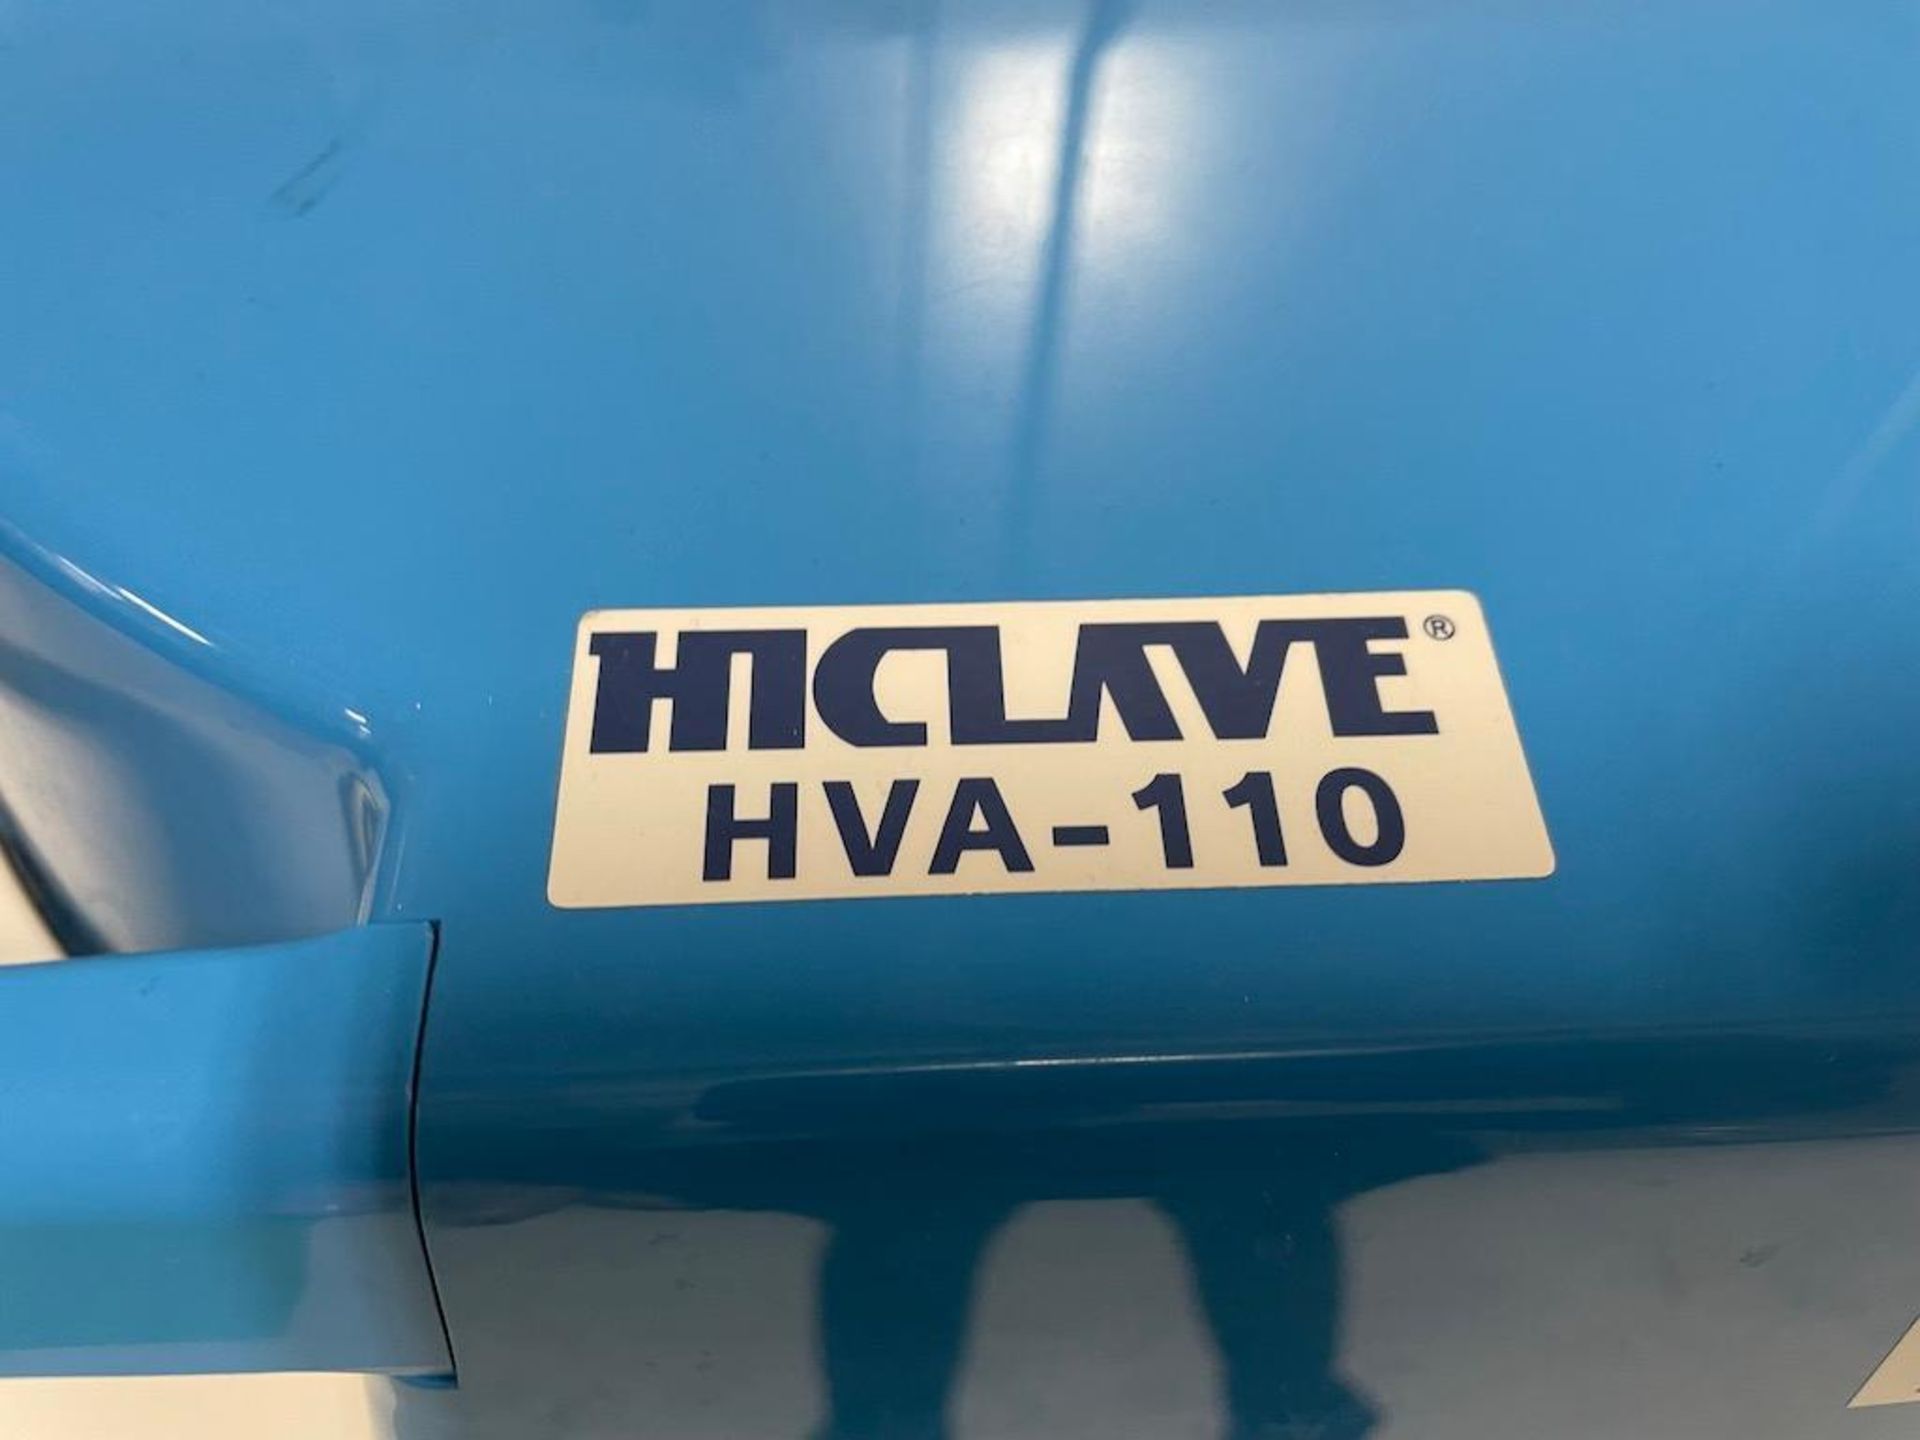 2018 HIRAYAMA AUTOCLAVE MODEL HICLAVE HVA-110, SN 31918051712 - Image 3 of 7